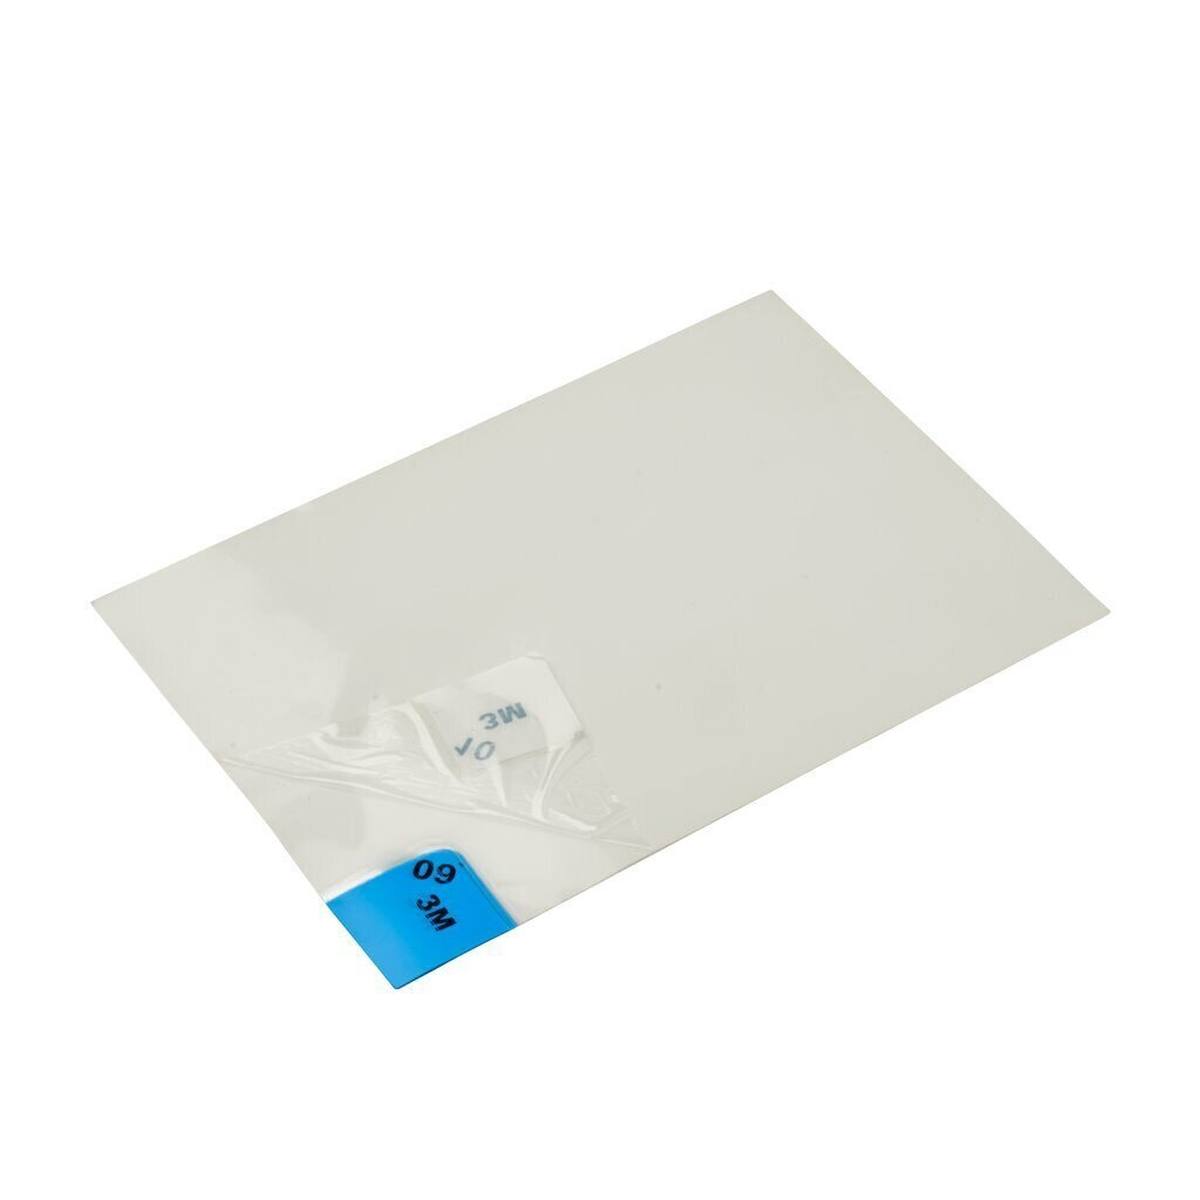 3M 4300 Nomad Alfombrilla adhesiva para polvo fino, blanca, 0,9 m x 0,45 m, 40 capas de polietileno transparente